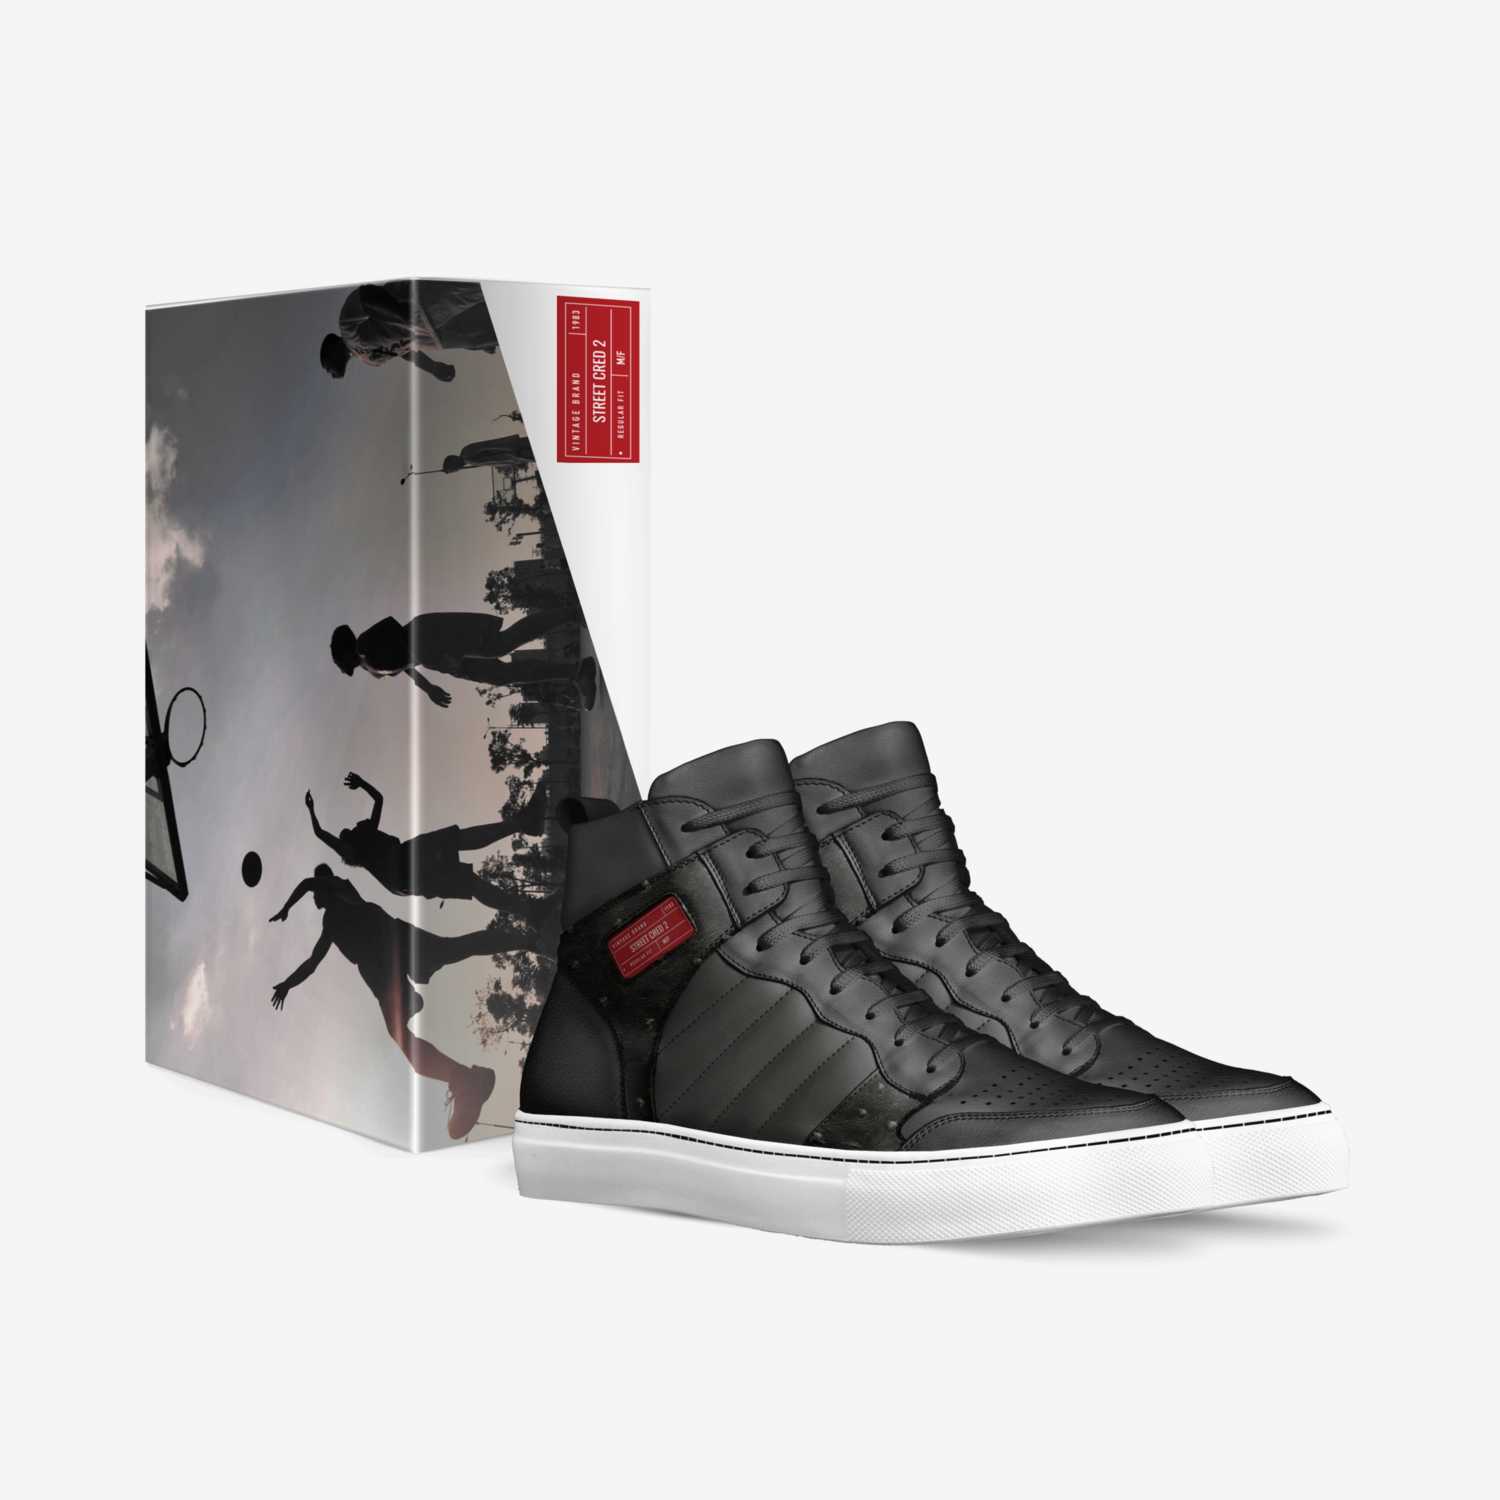 Street Cred 2 custom made in Italy shoes by Gavino Nishio | Box view